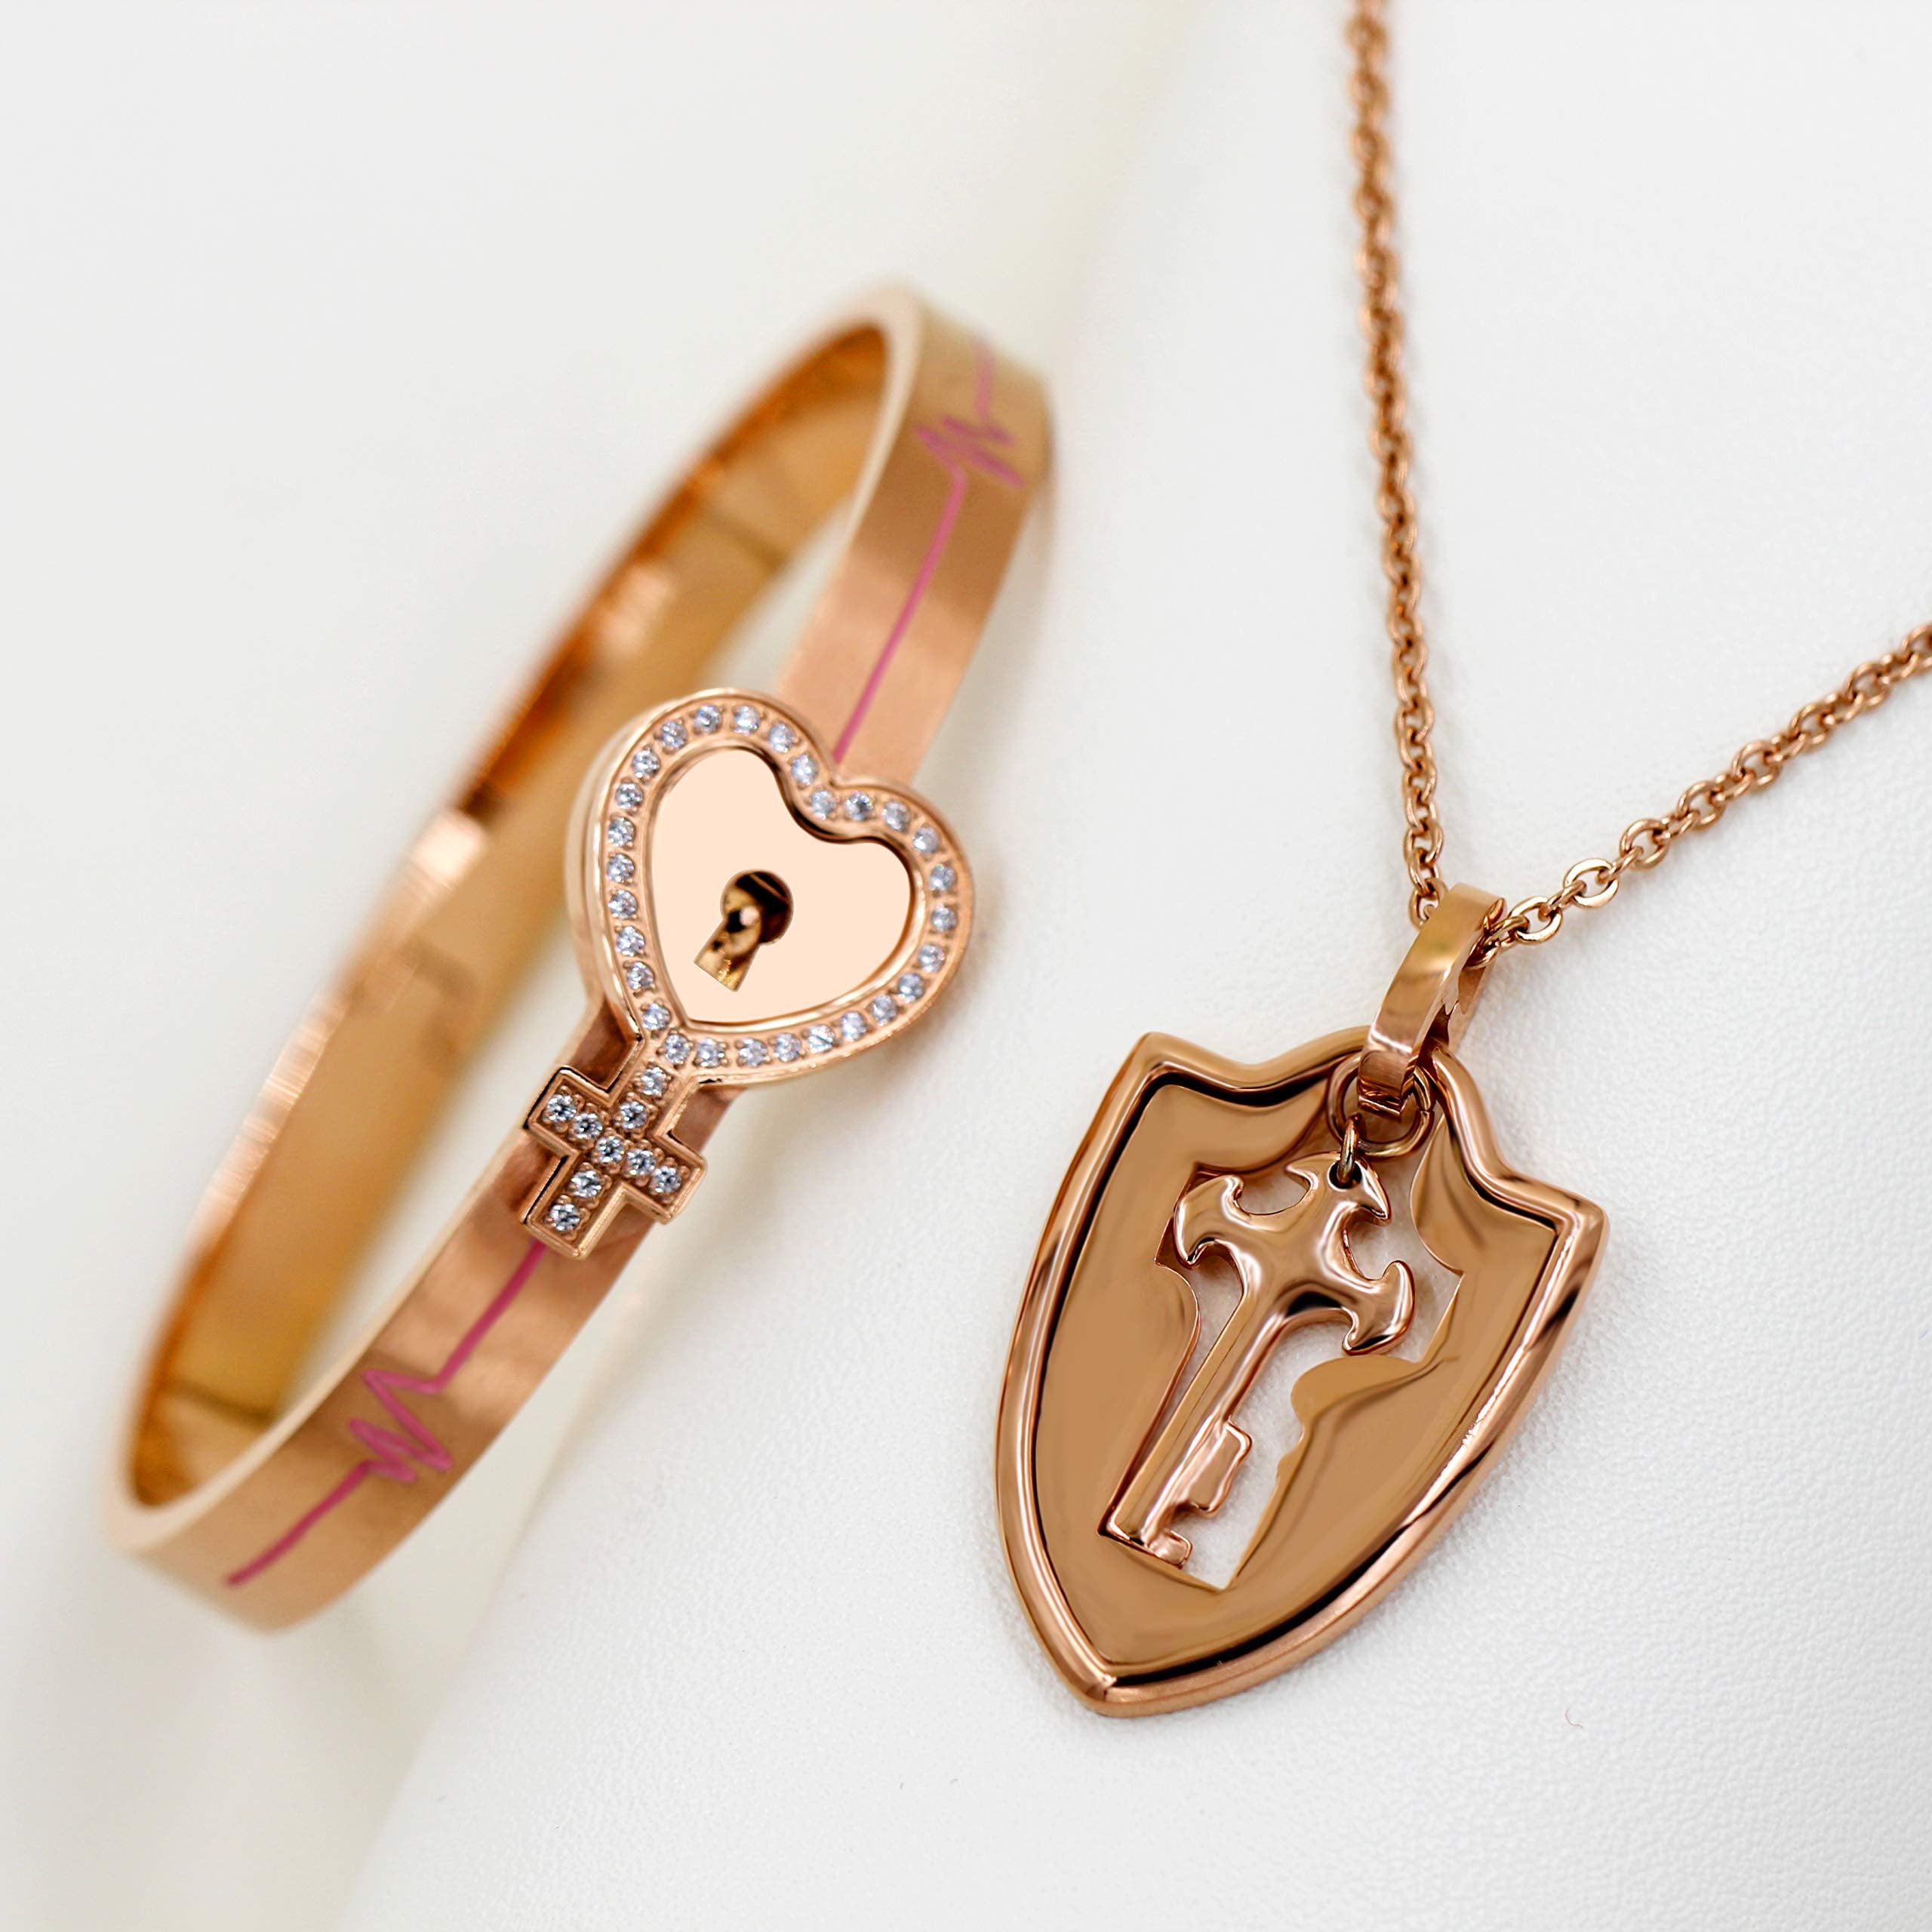 Uloveido Egyptian Ankh Cross Heartbeat Lock Bracelet and Shield Key Pendant Necklace